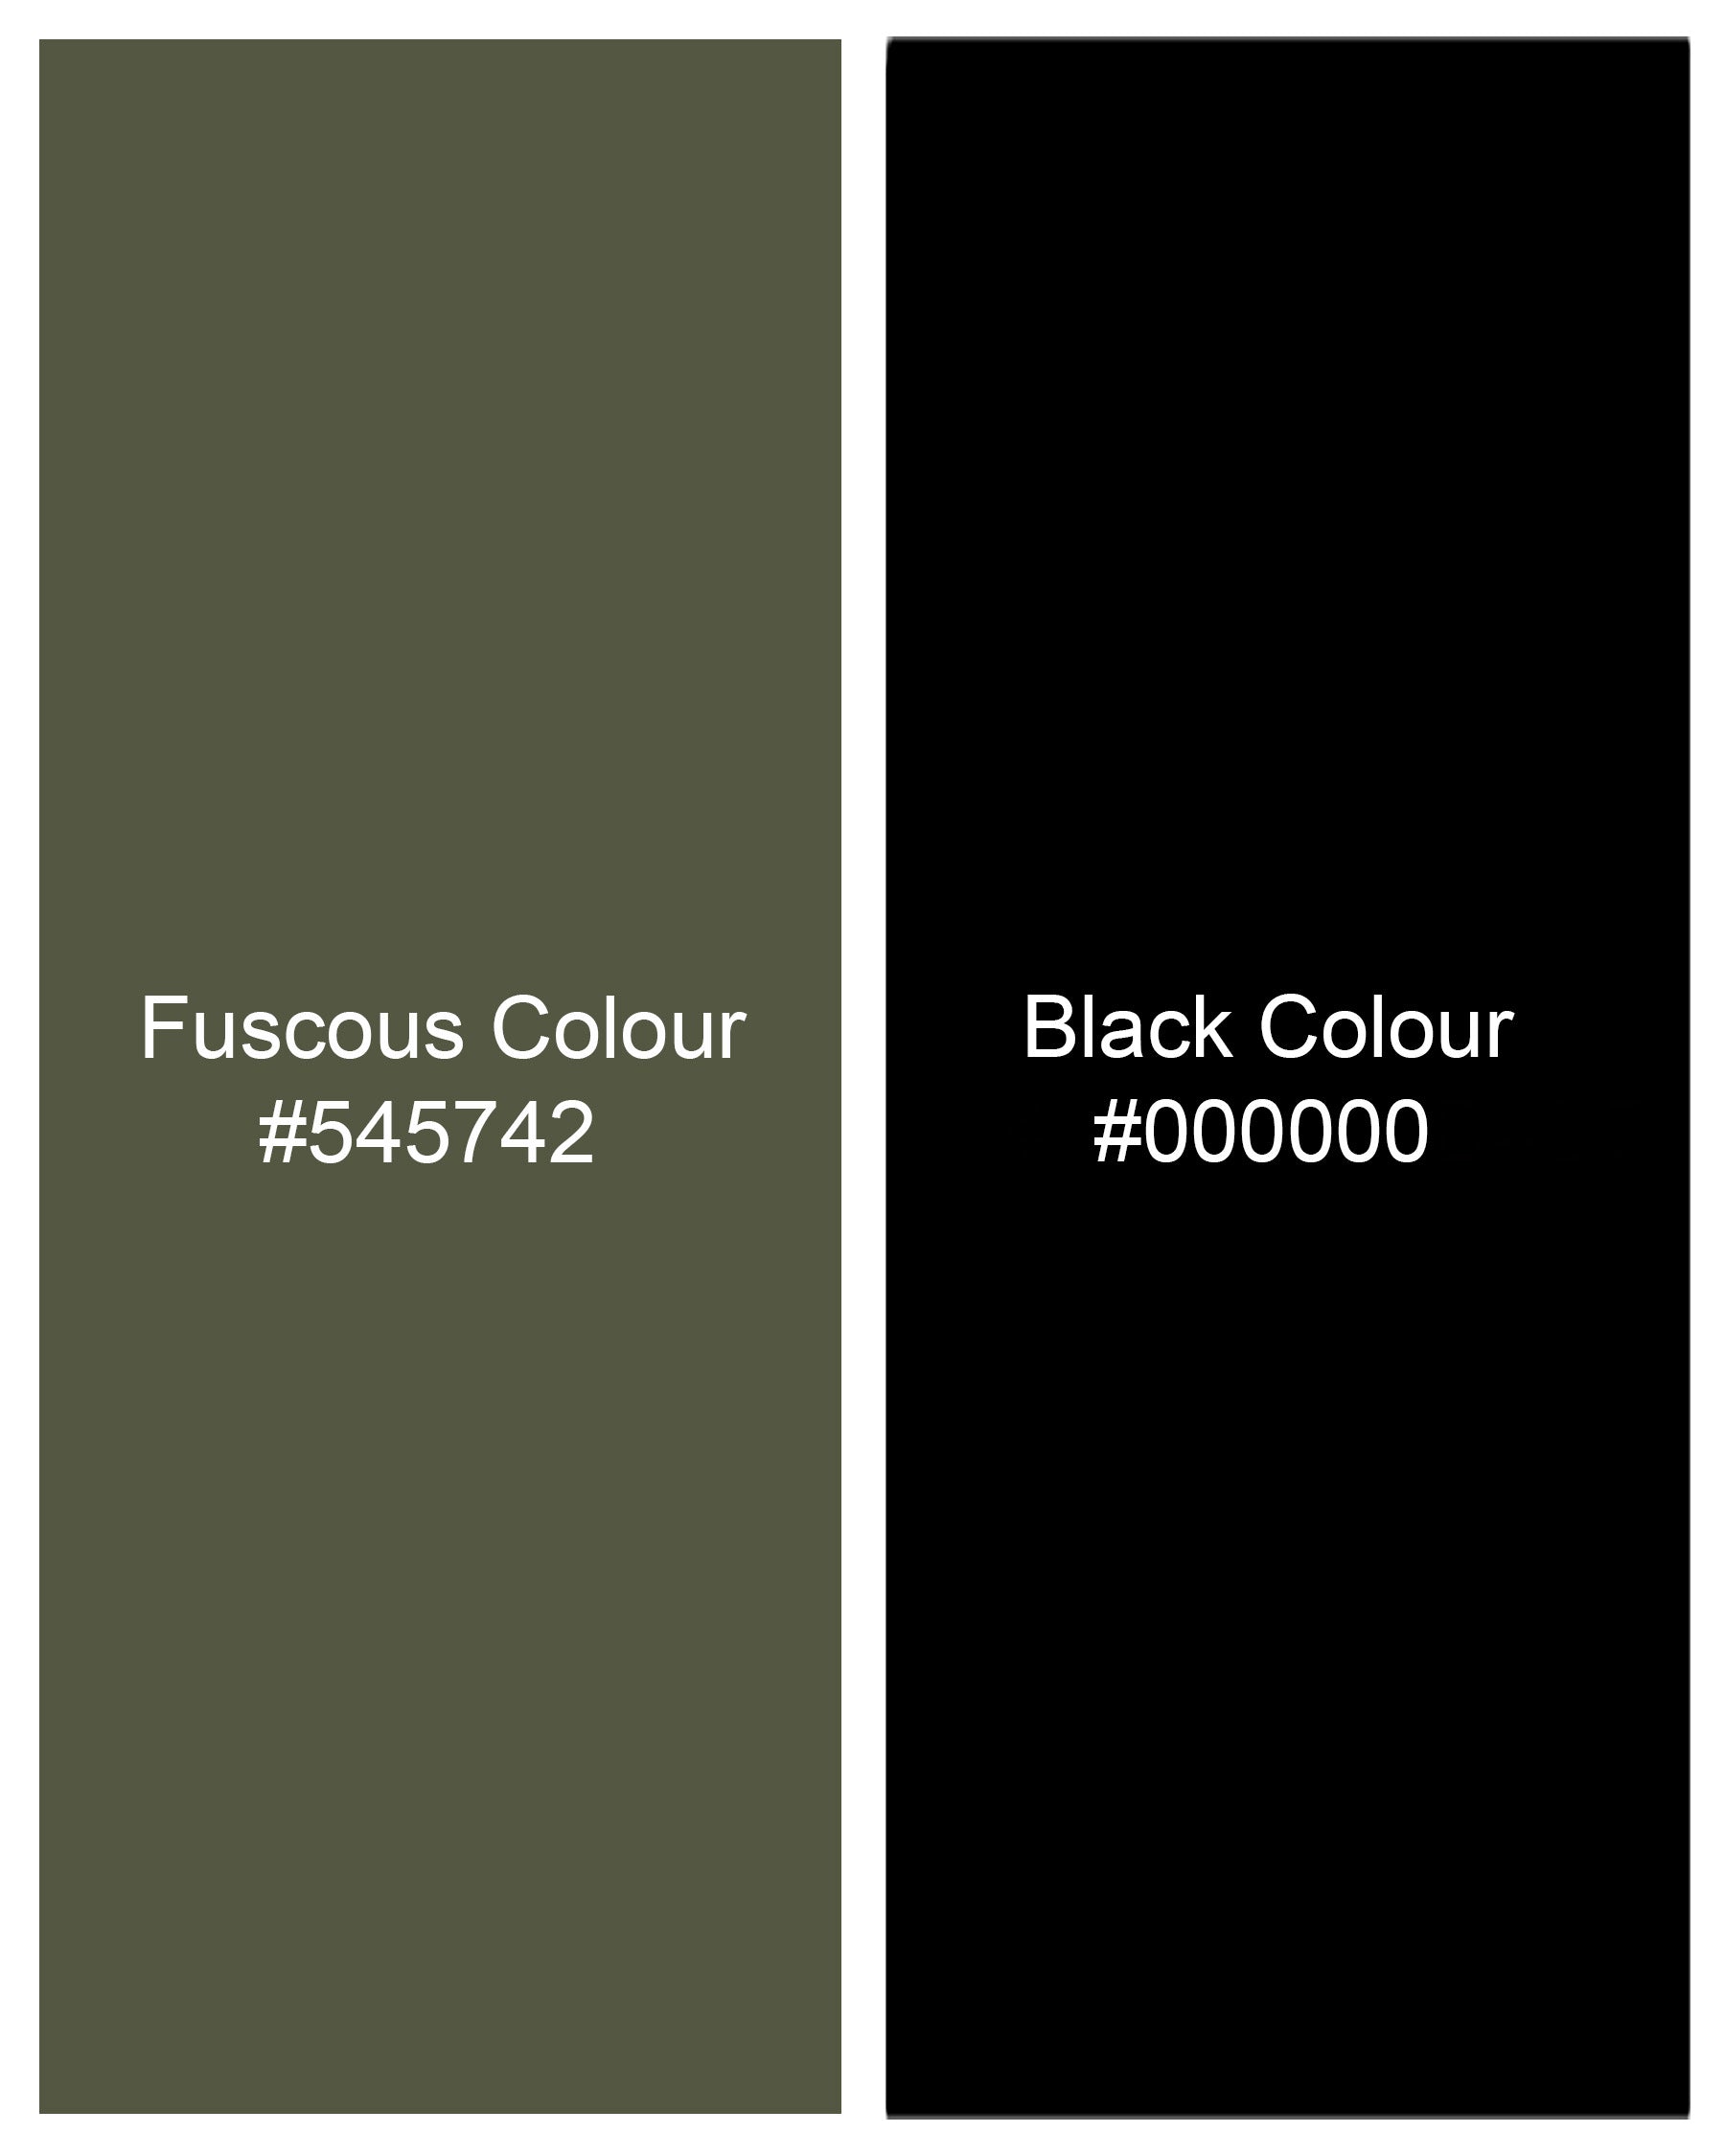 Fuscous Green and Black Striped Dobby Textured Giza Cotton Shirt 8213-BLK -38,8213-BLK -H-38,8213-BLK -39,8213-BLK -H-39,8213-BLK -40,8213-BLK -H-40,8213-BLK -42,8213-BLK -H-42,8213-BLK -44,8213-BLK -H-44,8213-BLK -46,8213-BLK -H-46,8213-BLK -48,8213-BLK -H-48,8213-BLK -50,8213-BLK -H-50,8213-BLK -52,8213-BLK -H-52